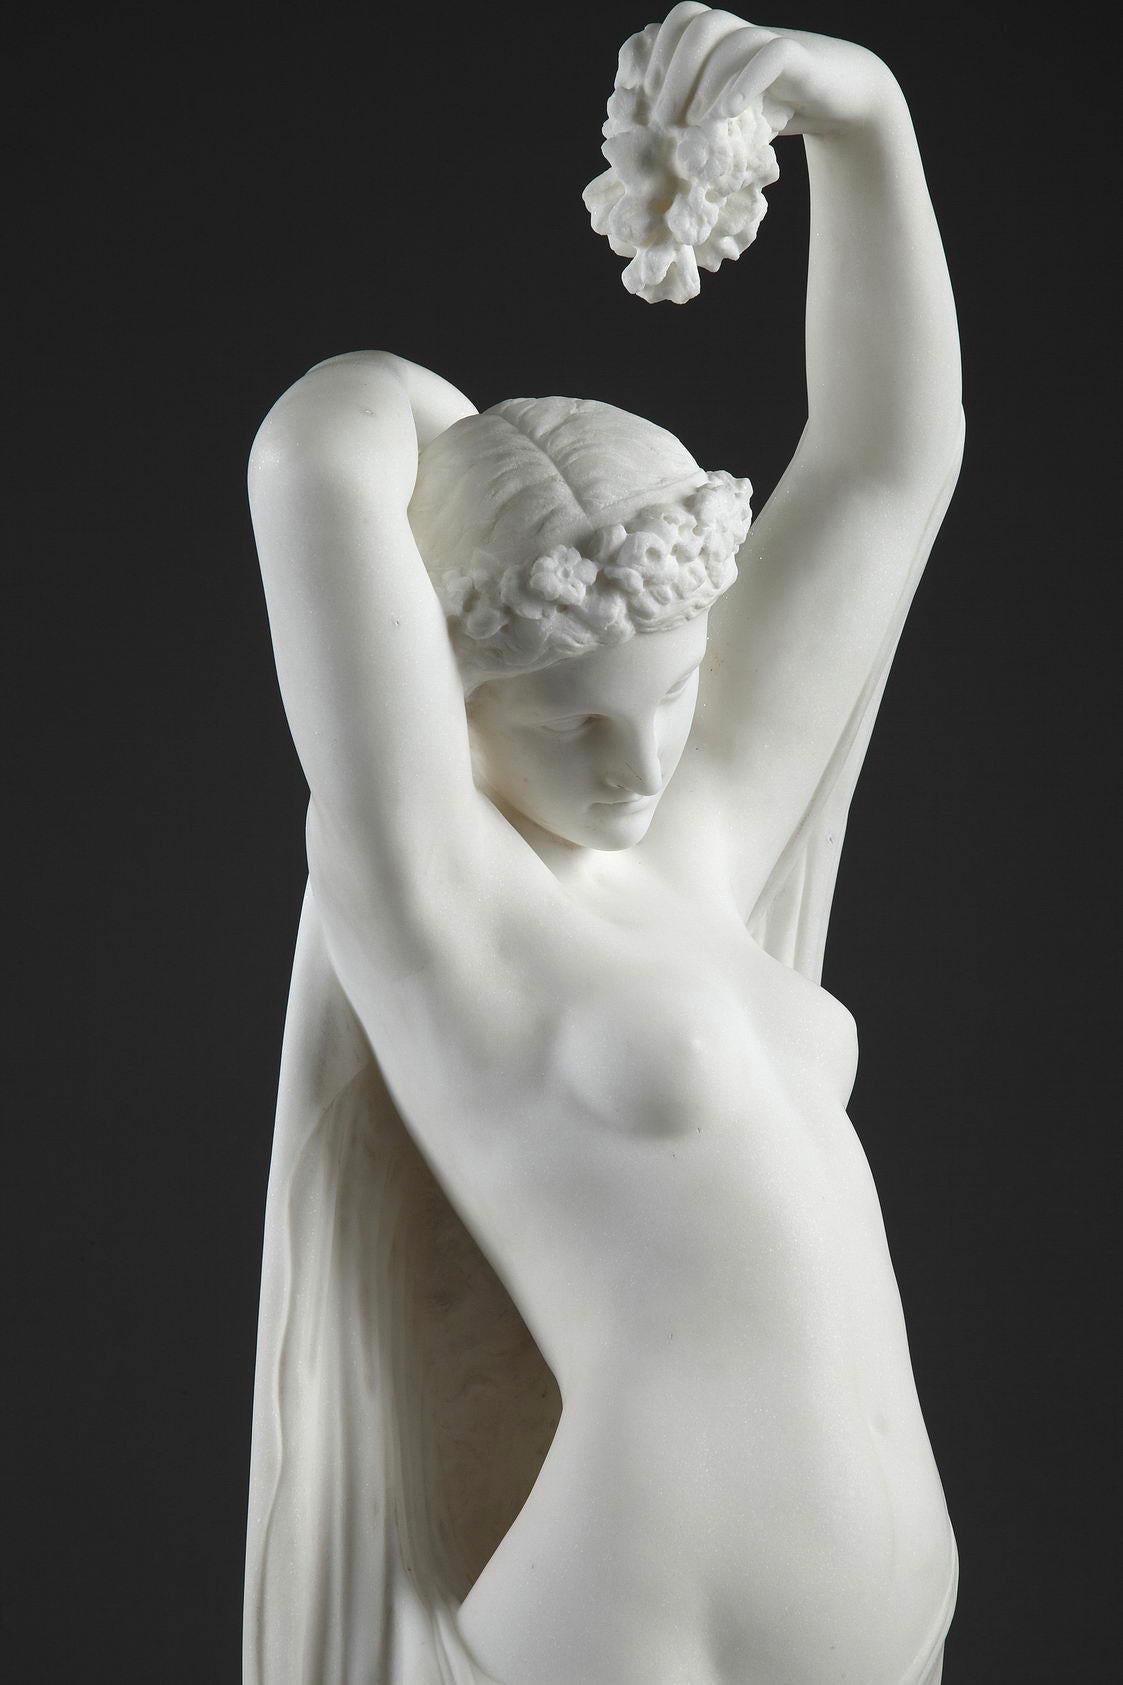 Daytime, marble sculpture - Black Nude Sculpture by James Pradier